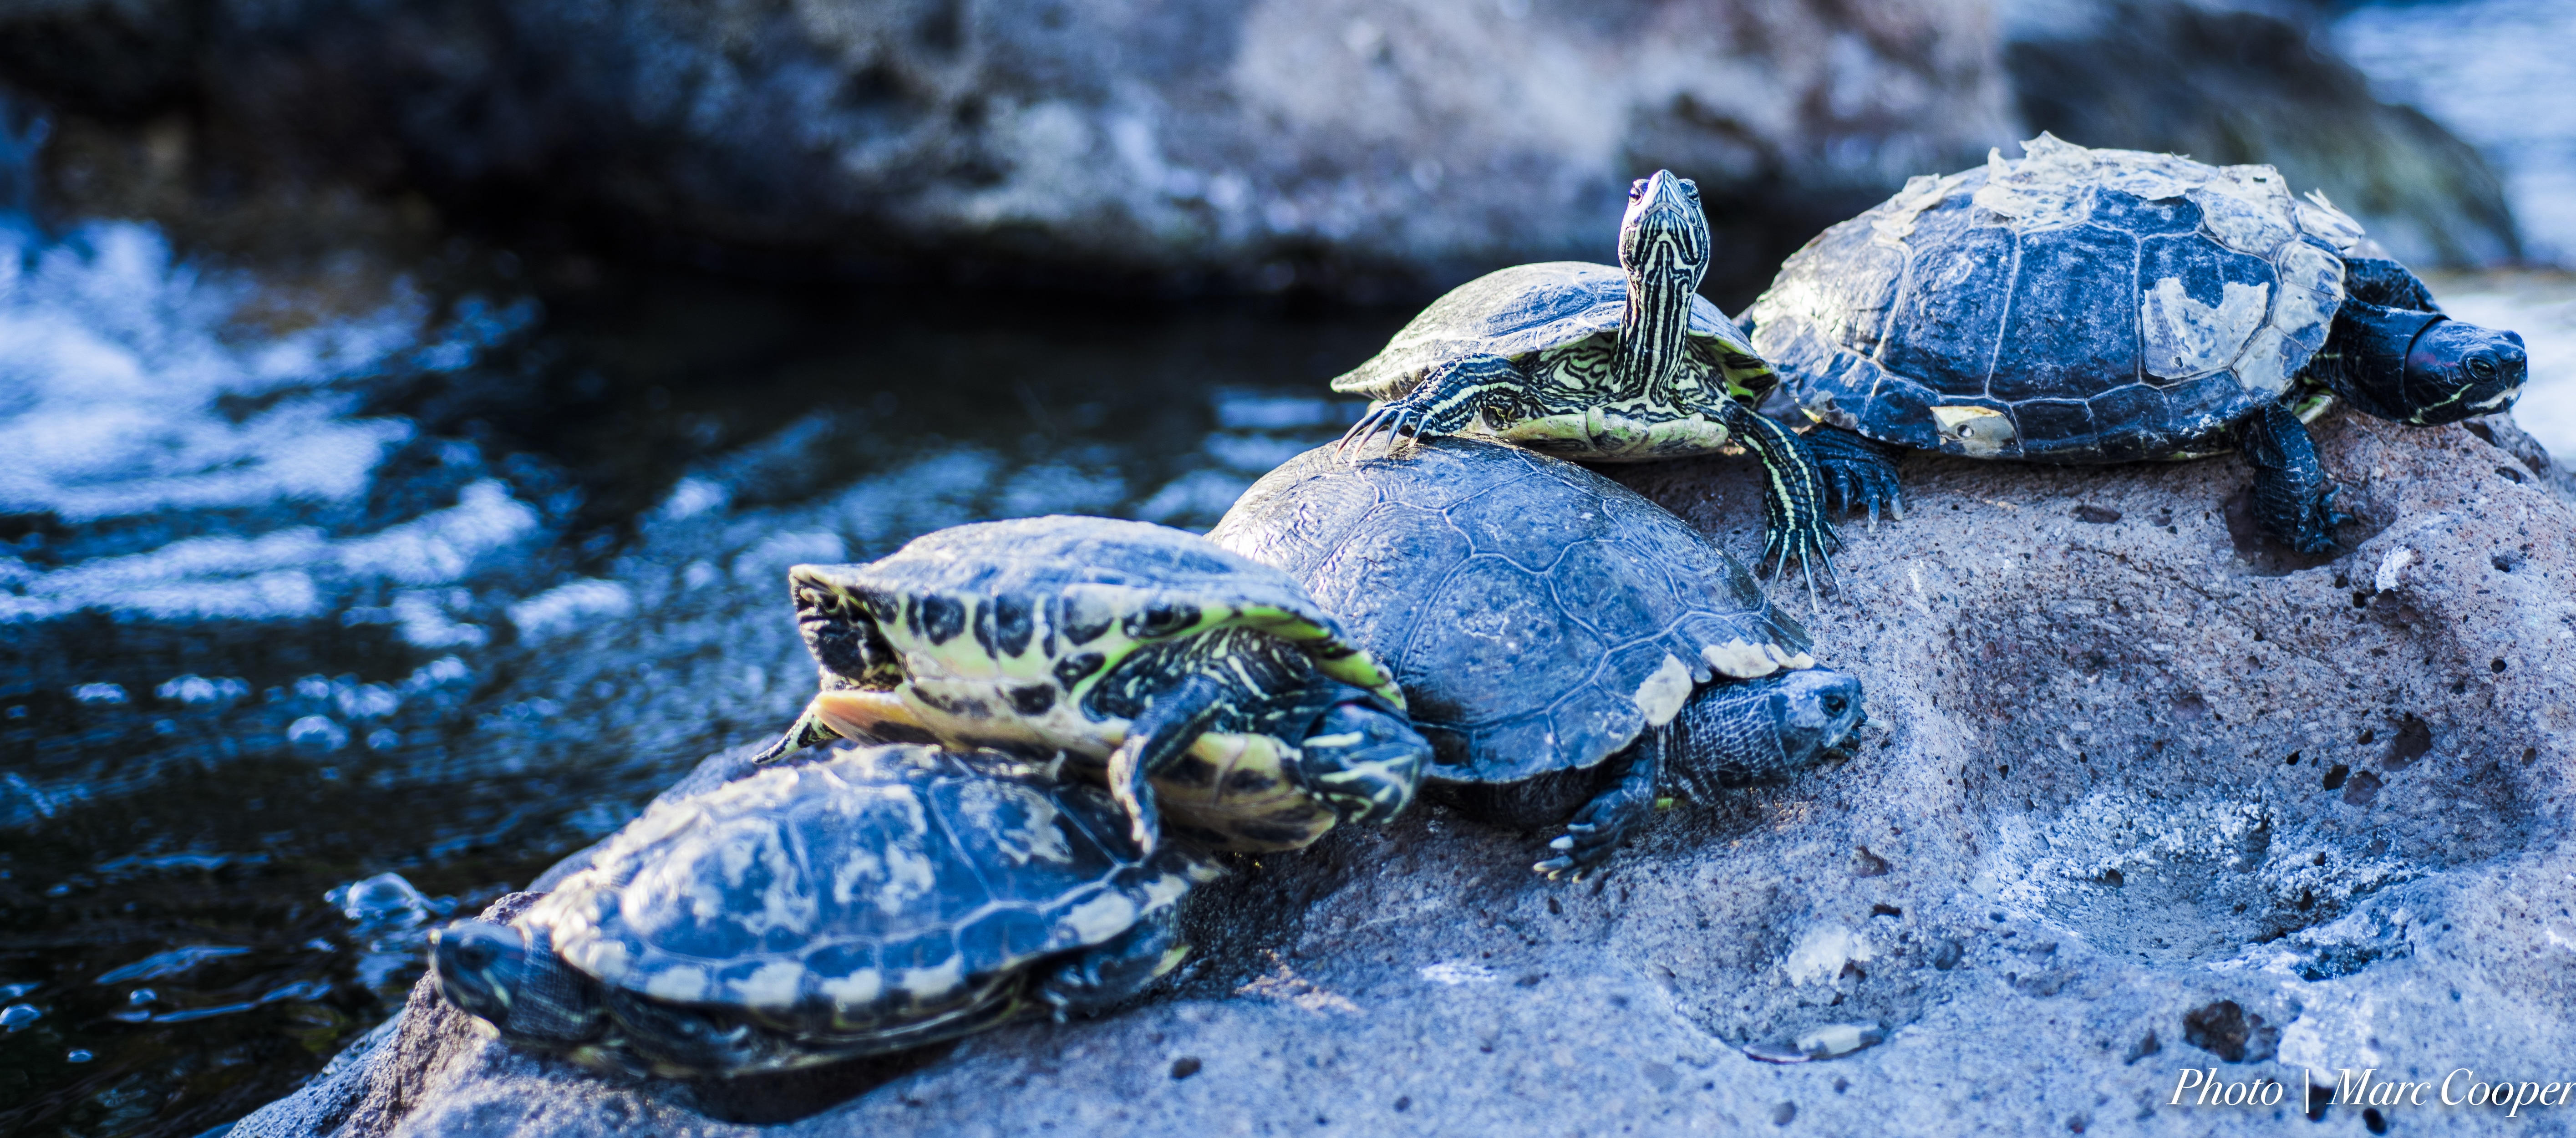 five turtles near water